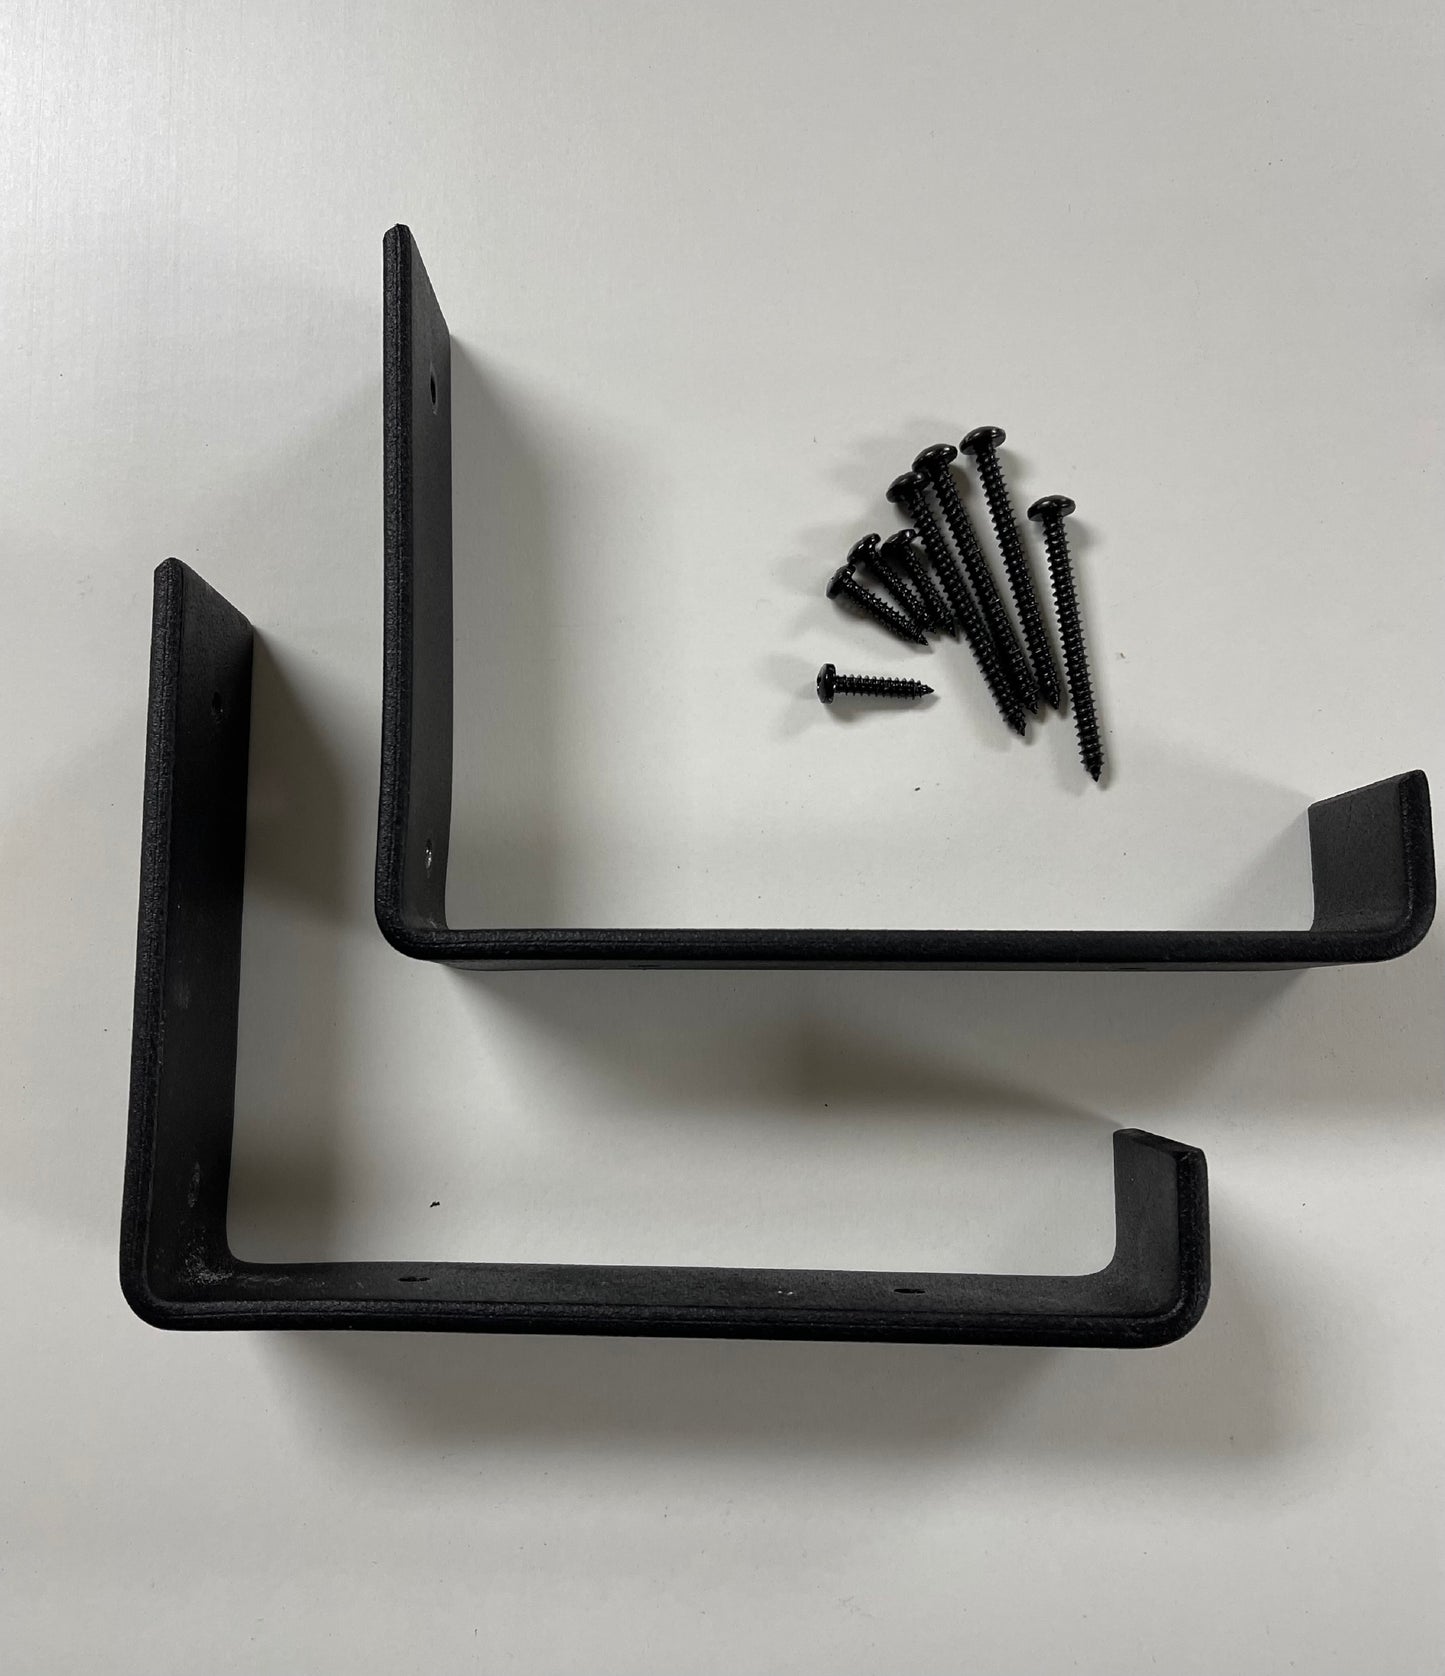 Premium American Black Walnut Industrial Style Shelf with Lipped Up Brackets, 20-25mm (1 Inch) Depth